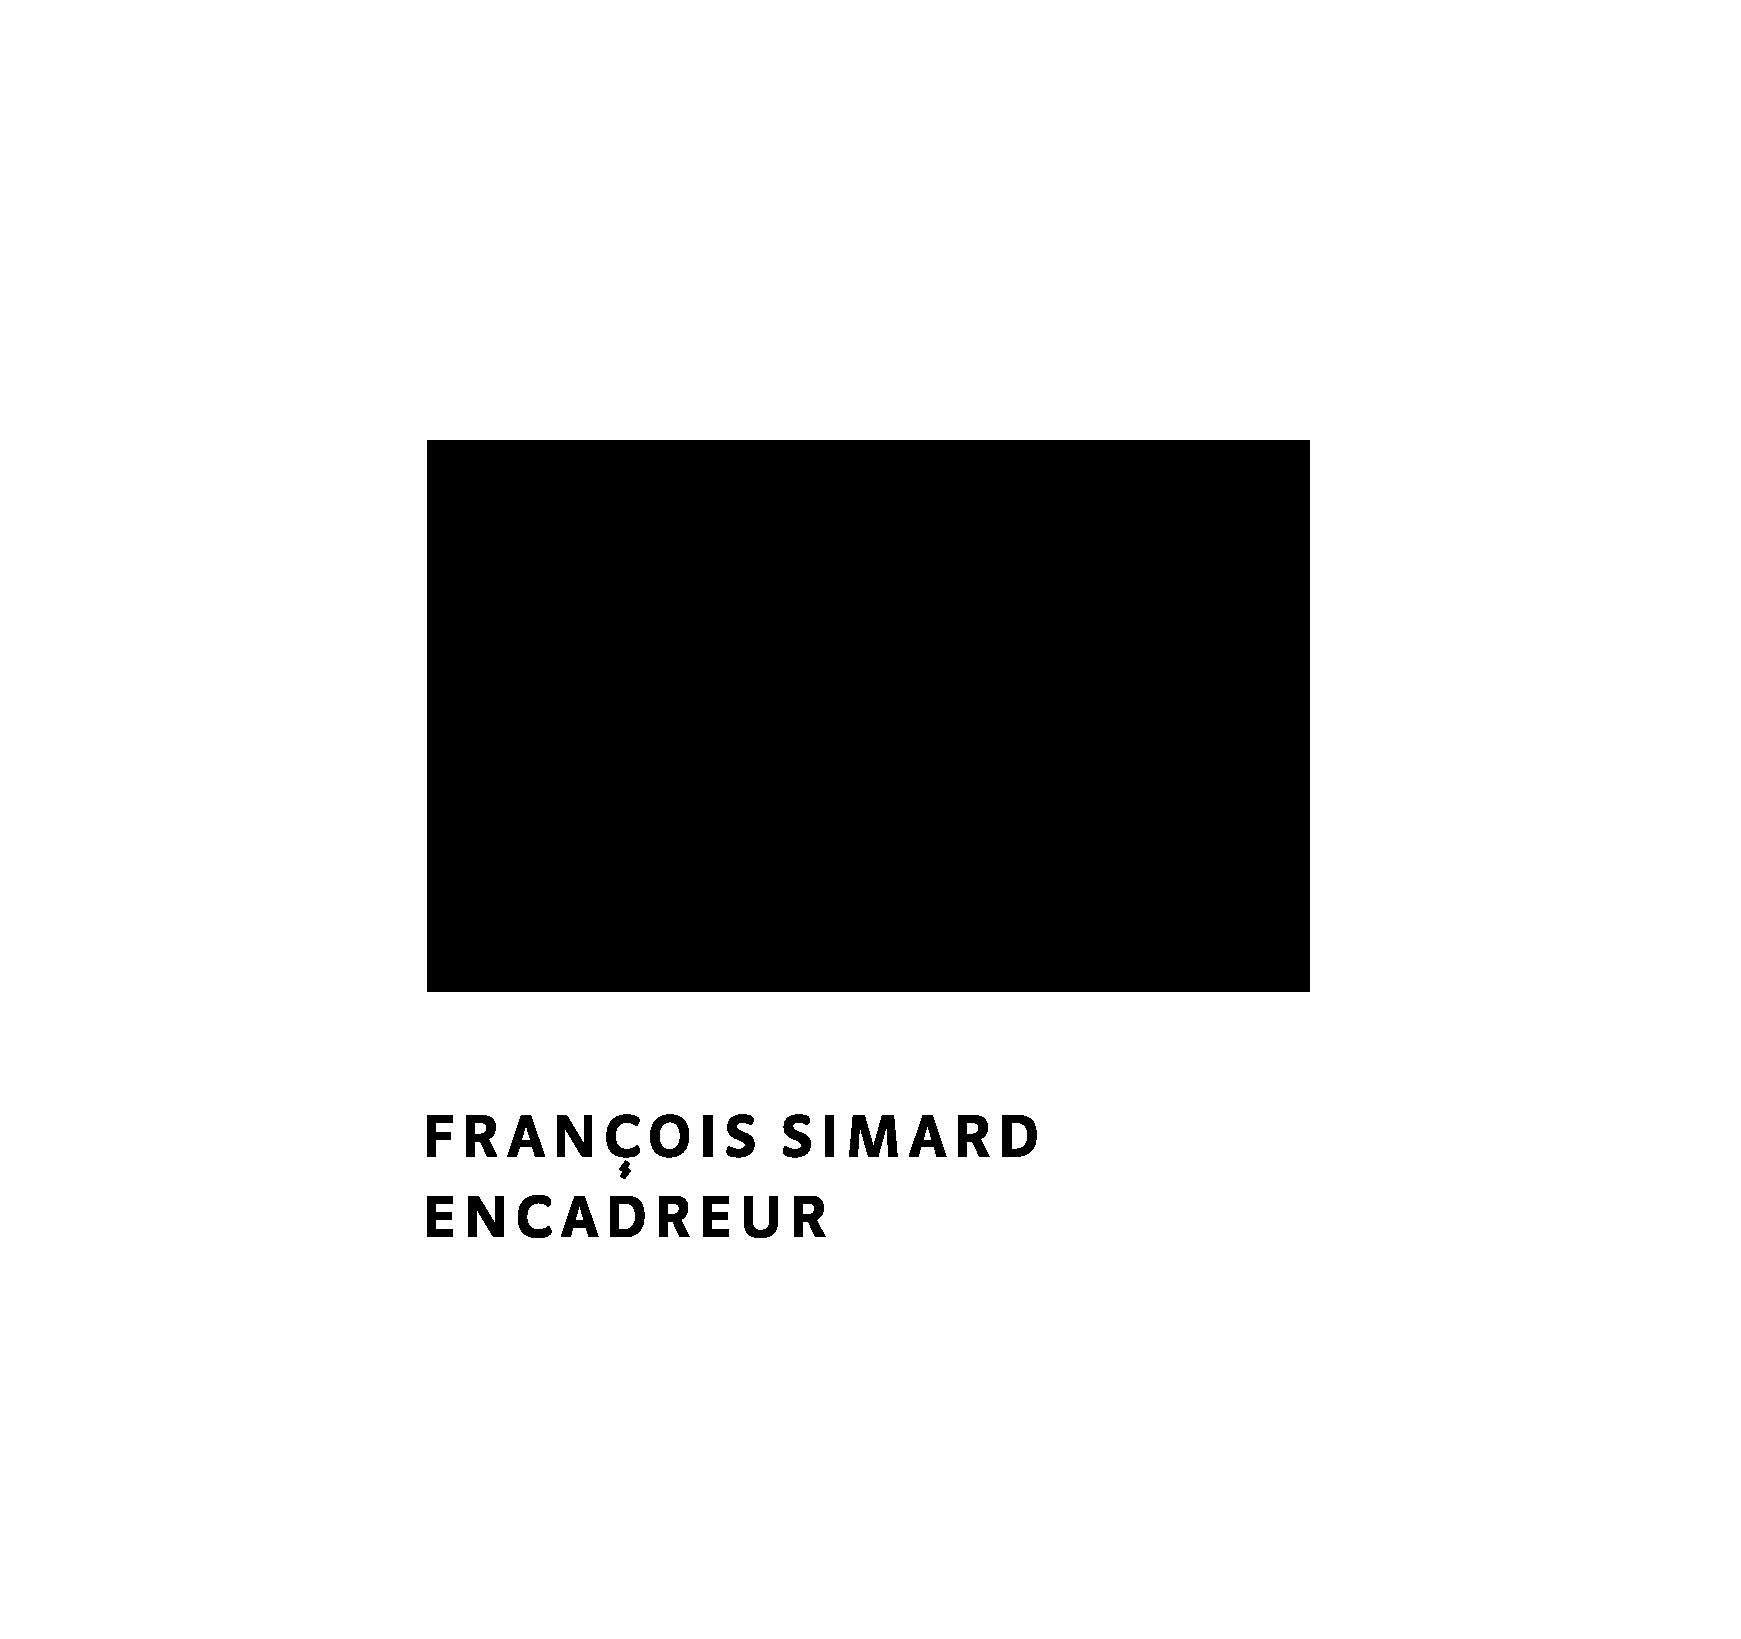 François Simard